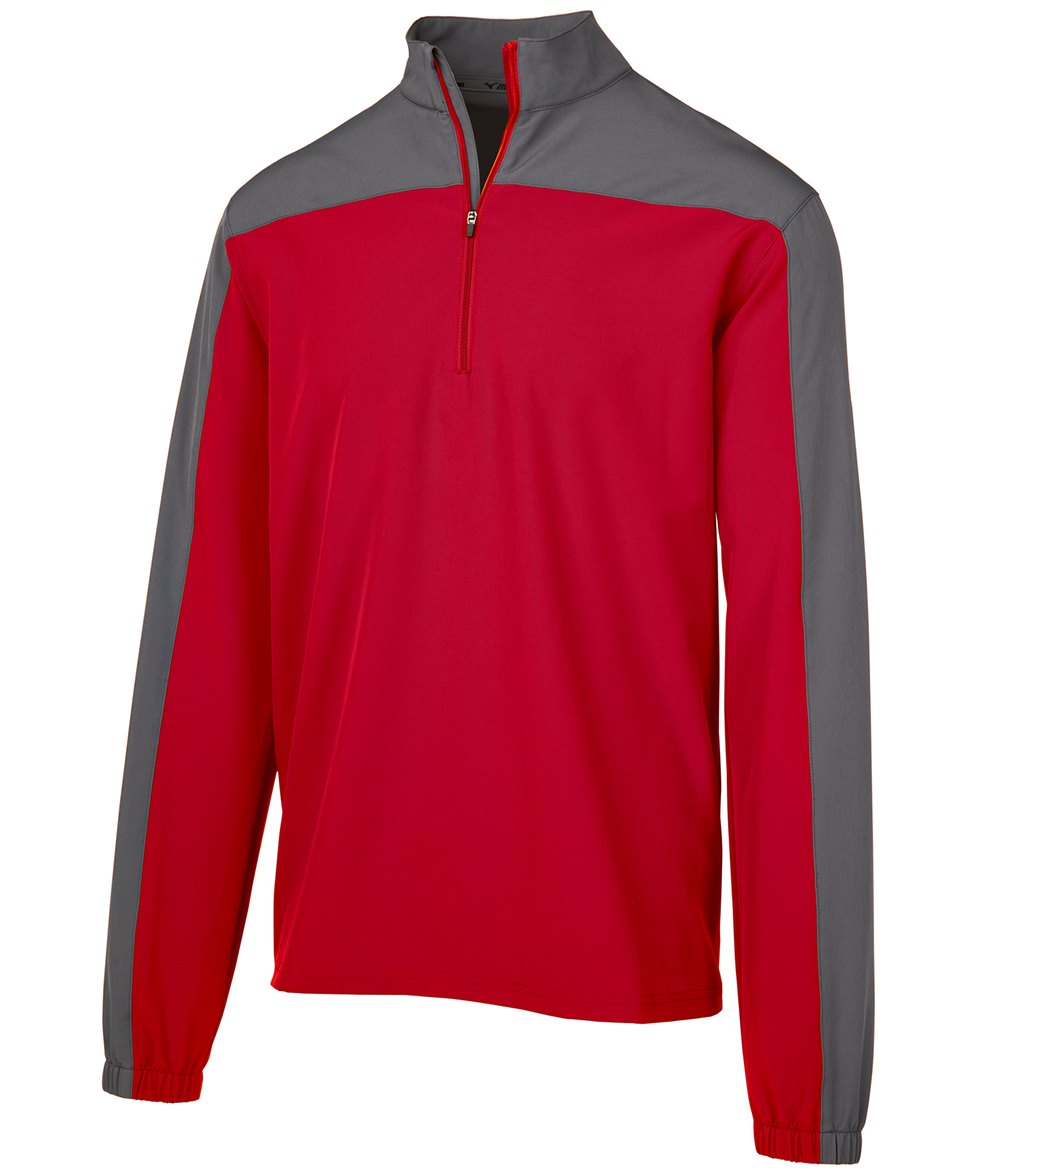 Mizuno Men's Comp Long Sleeve Batting Jacket - Red-Shade Medium Red/Shade - Swimoutlet.com